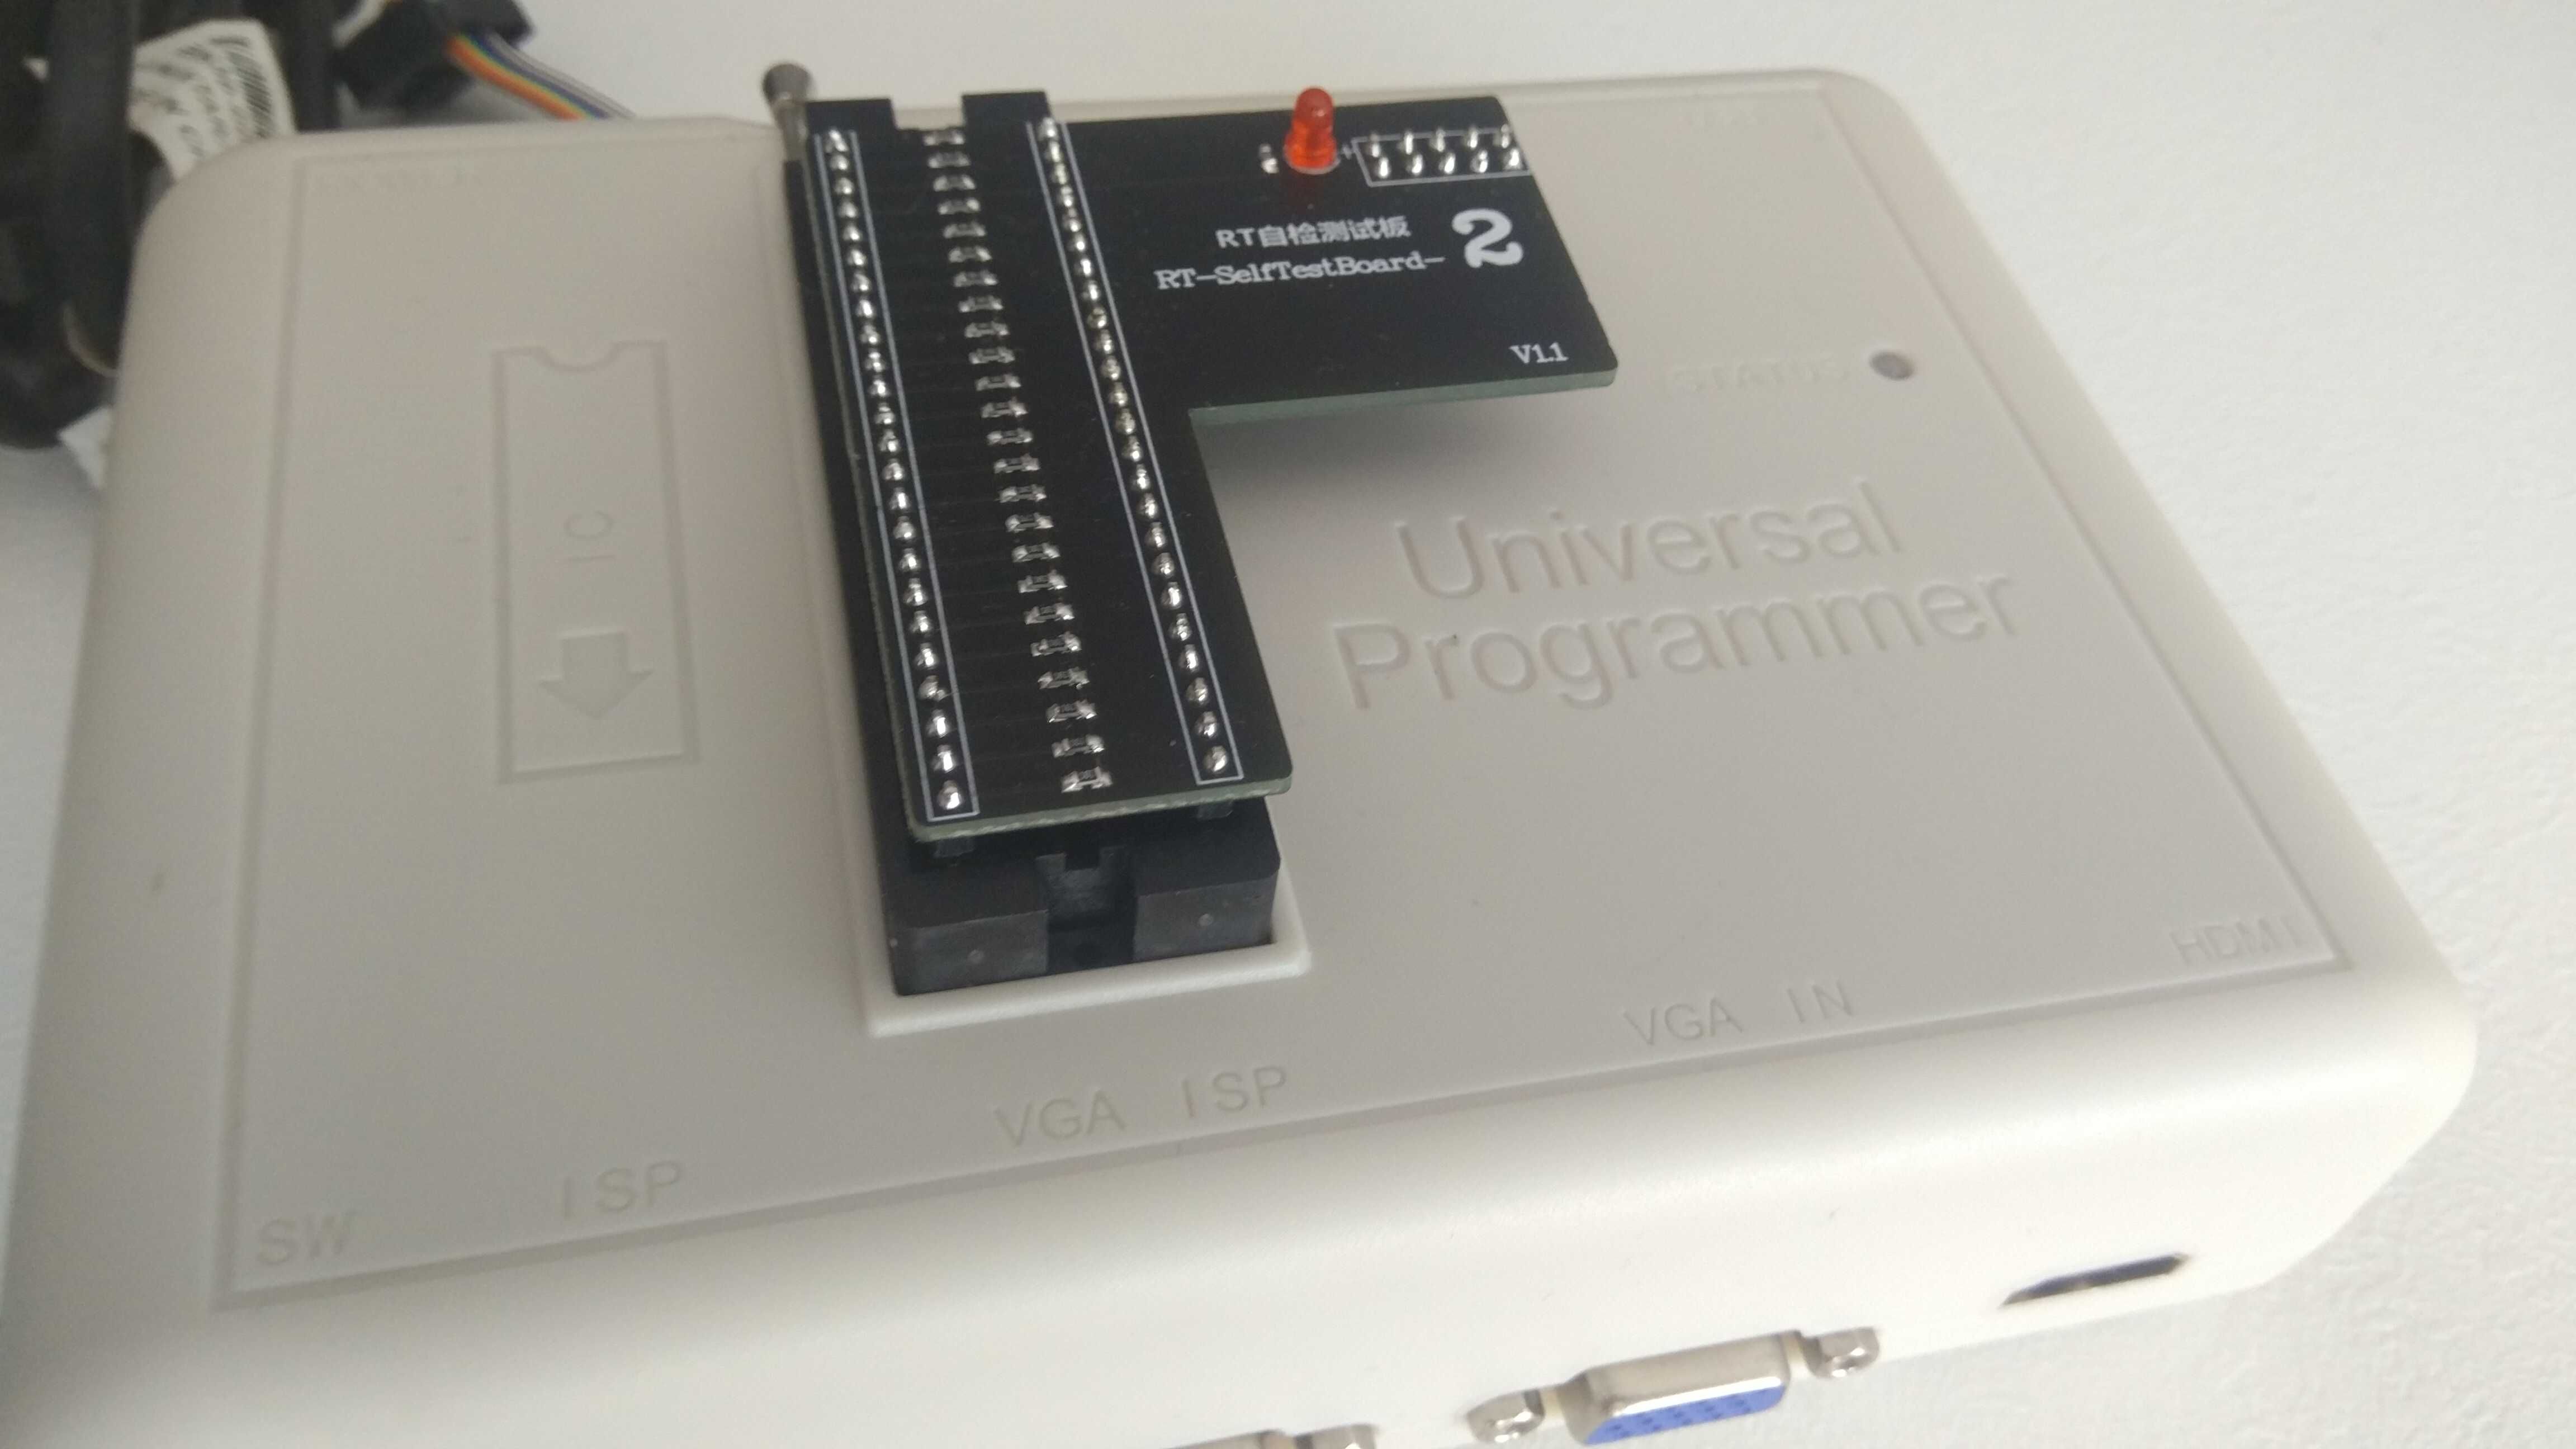 RT809H Uniwersalny Programator